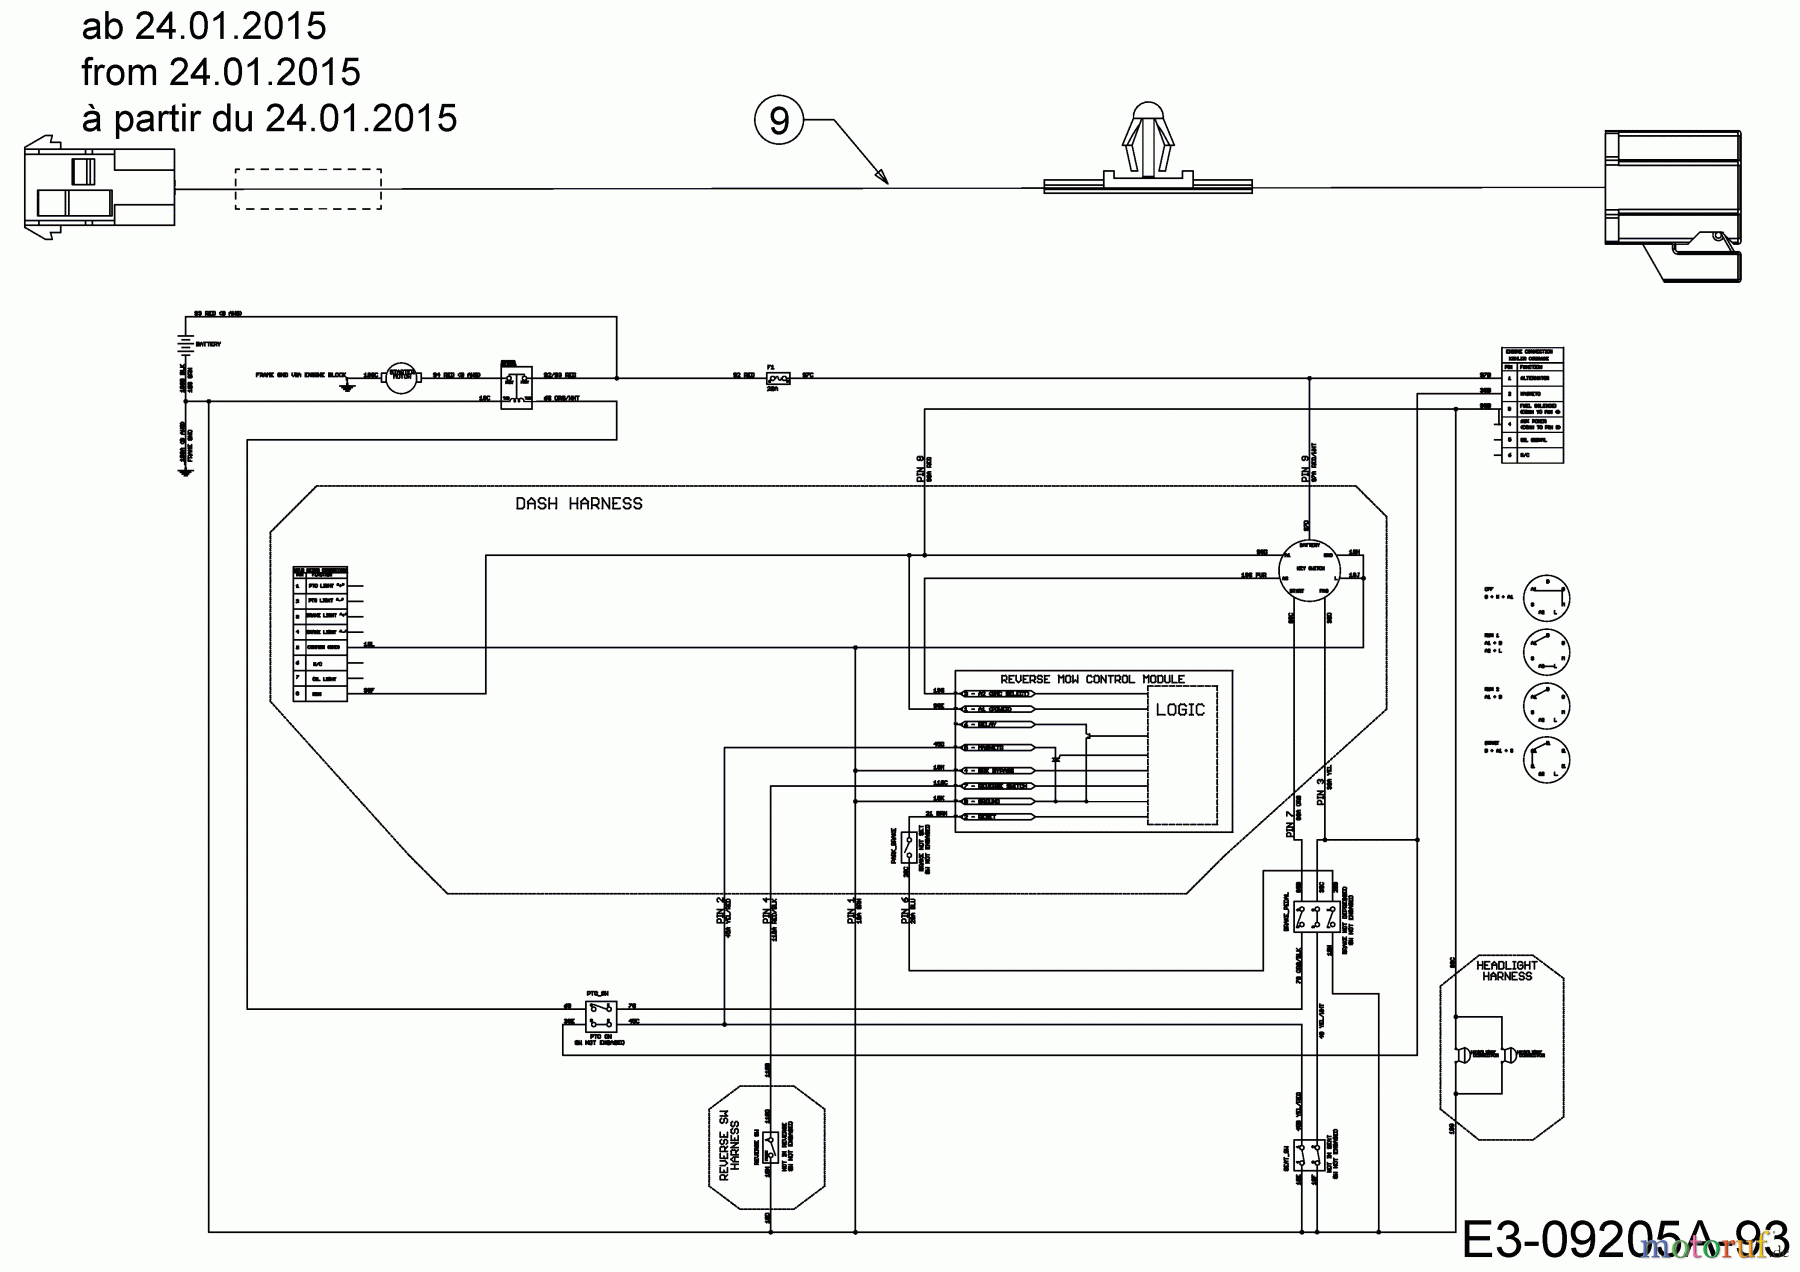  Troy-Bilt Lawn tractors TB 2042 13APA1KS309  (2015) Wiring diagram reverse from 24.01.2015